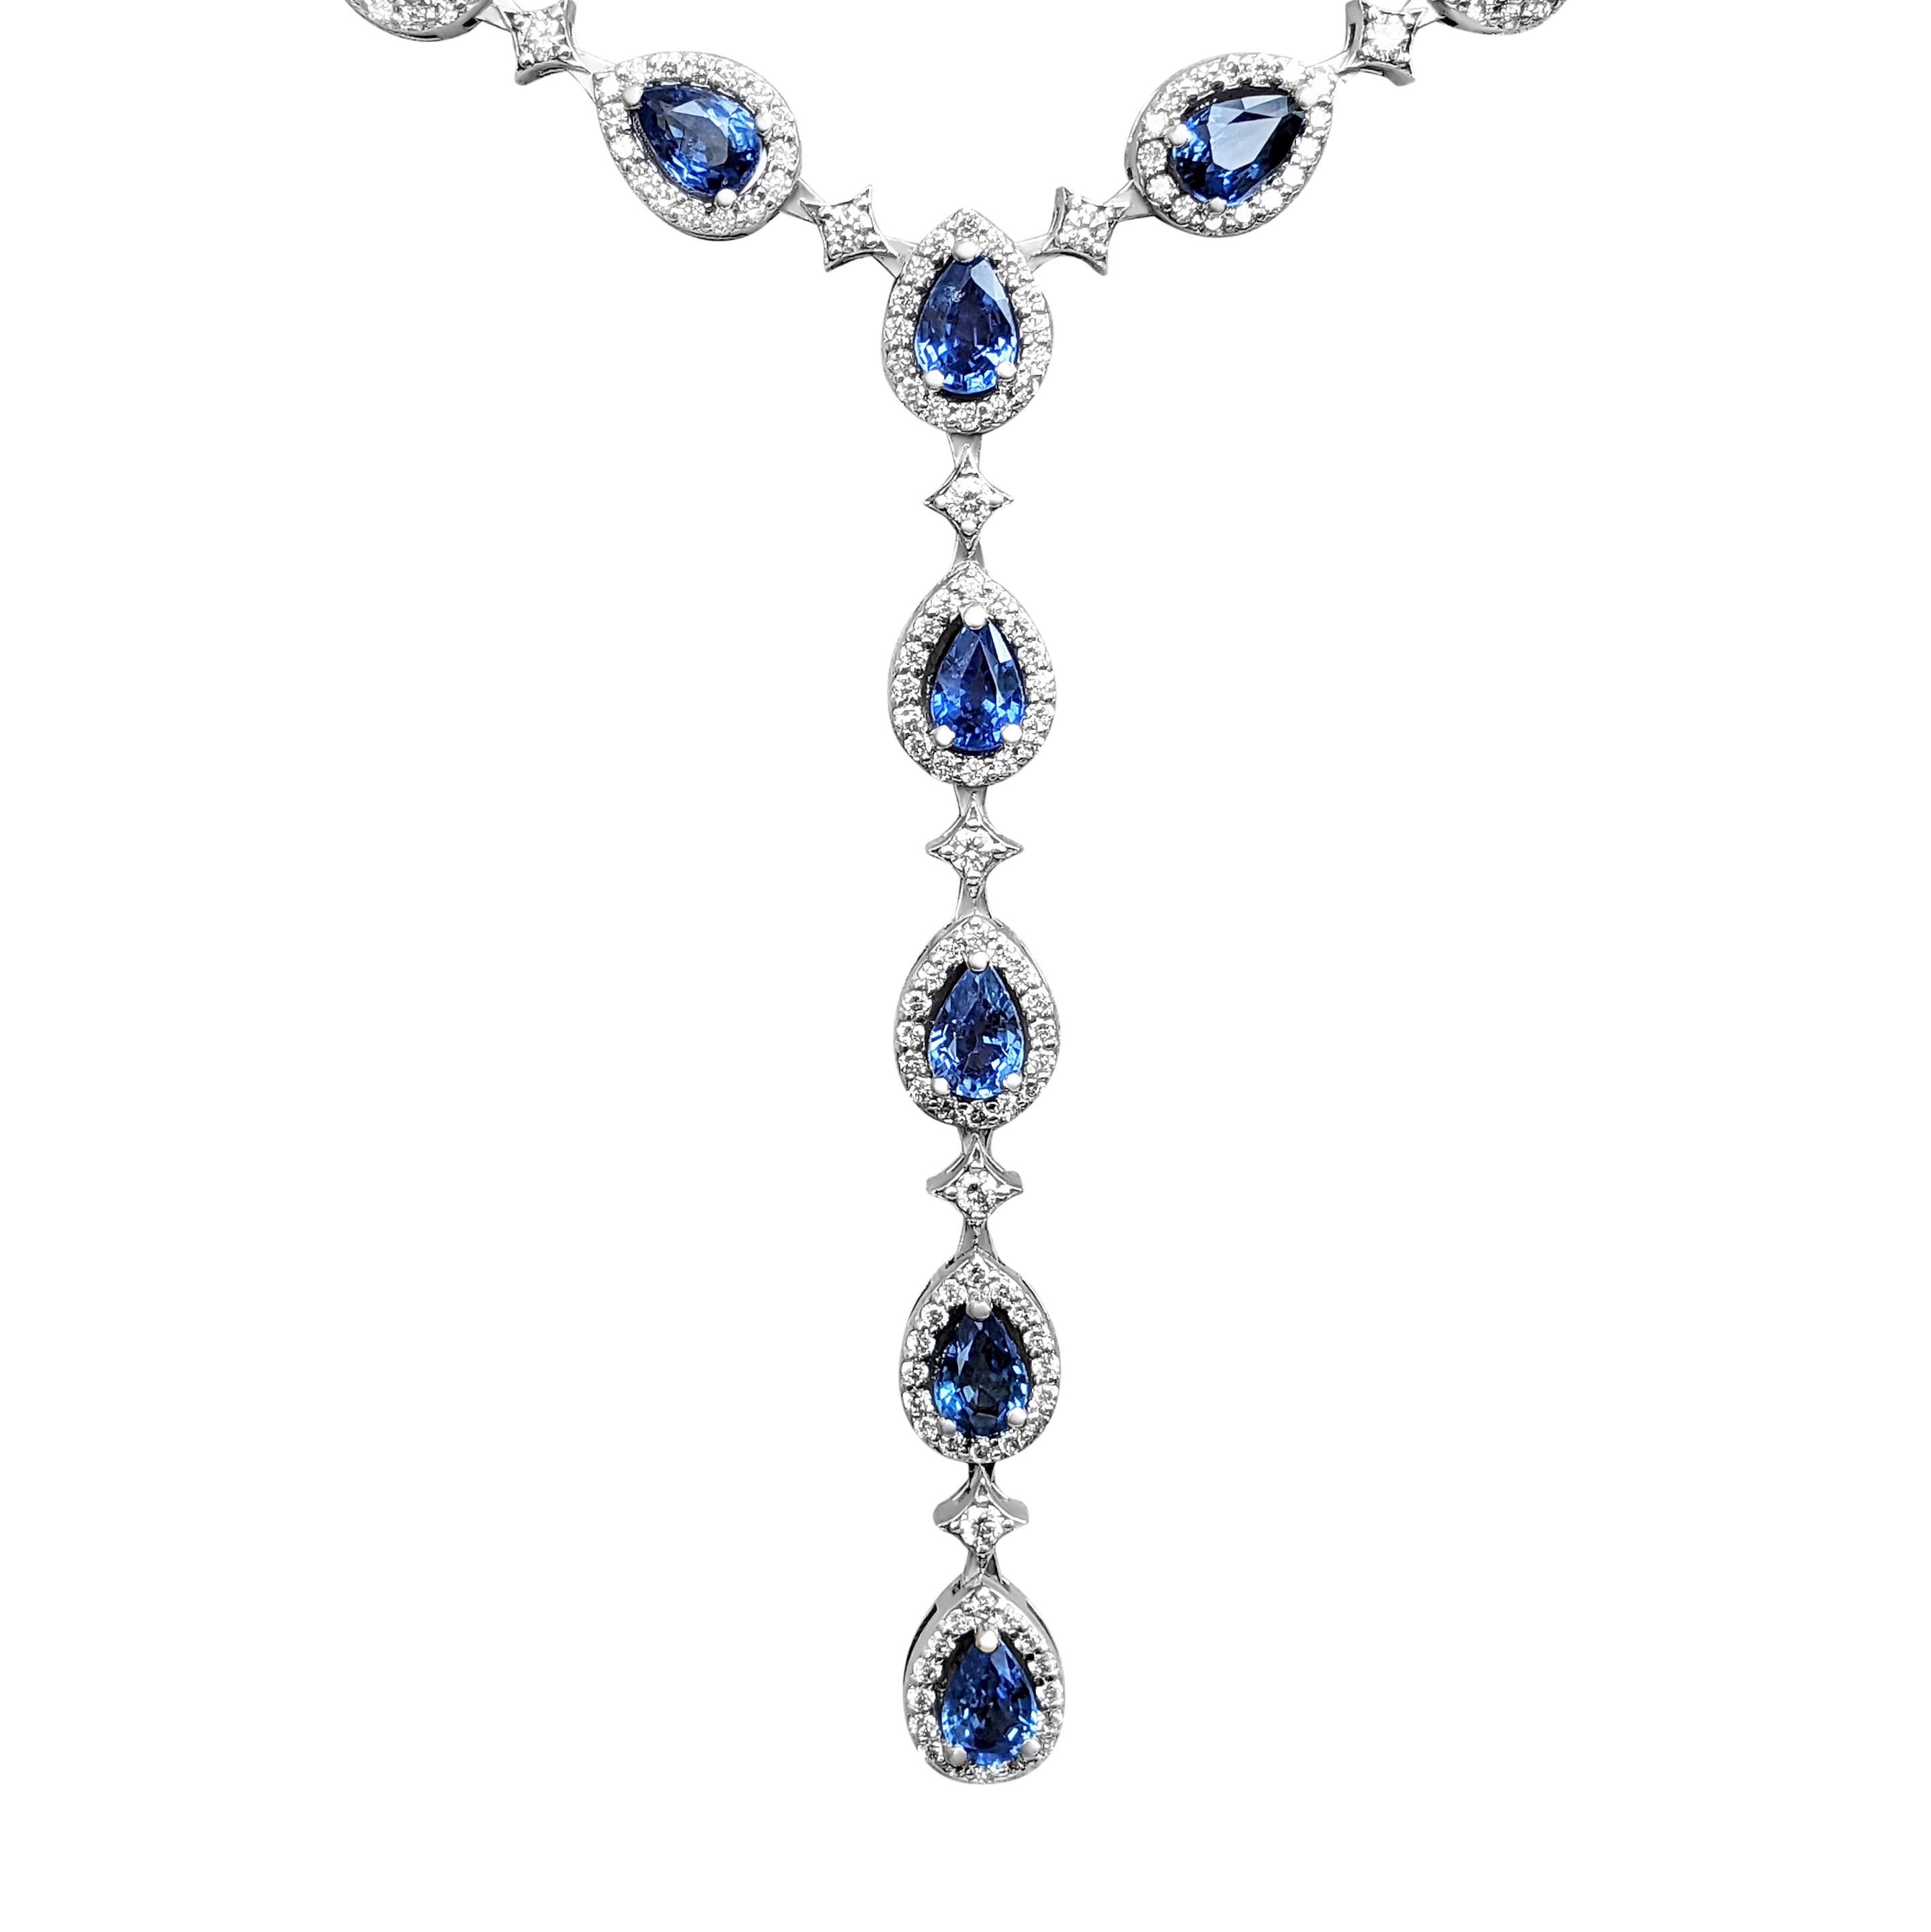 Pear Cut No Reserve, 7.47ct Blue Sapphires & 1.55cttw Diamonds, 14k White Gold Necklace For Sale